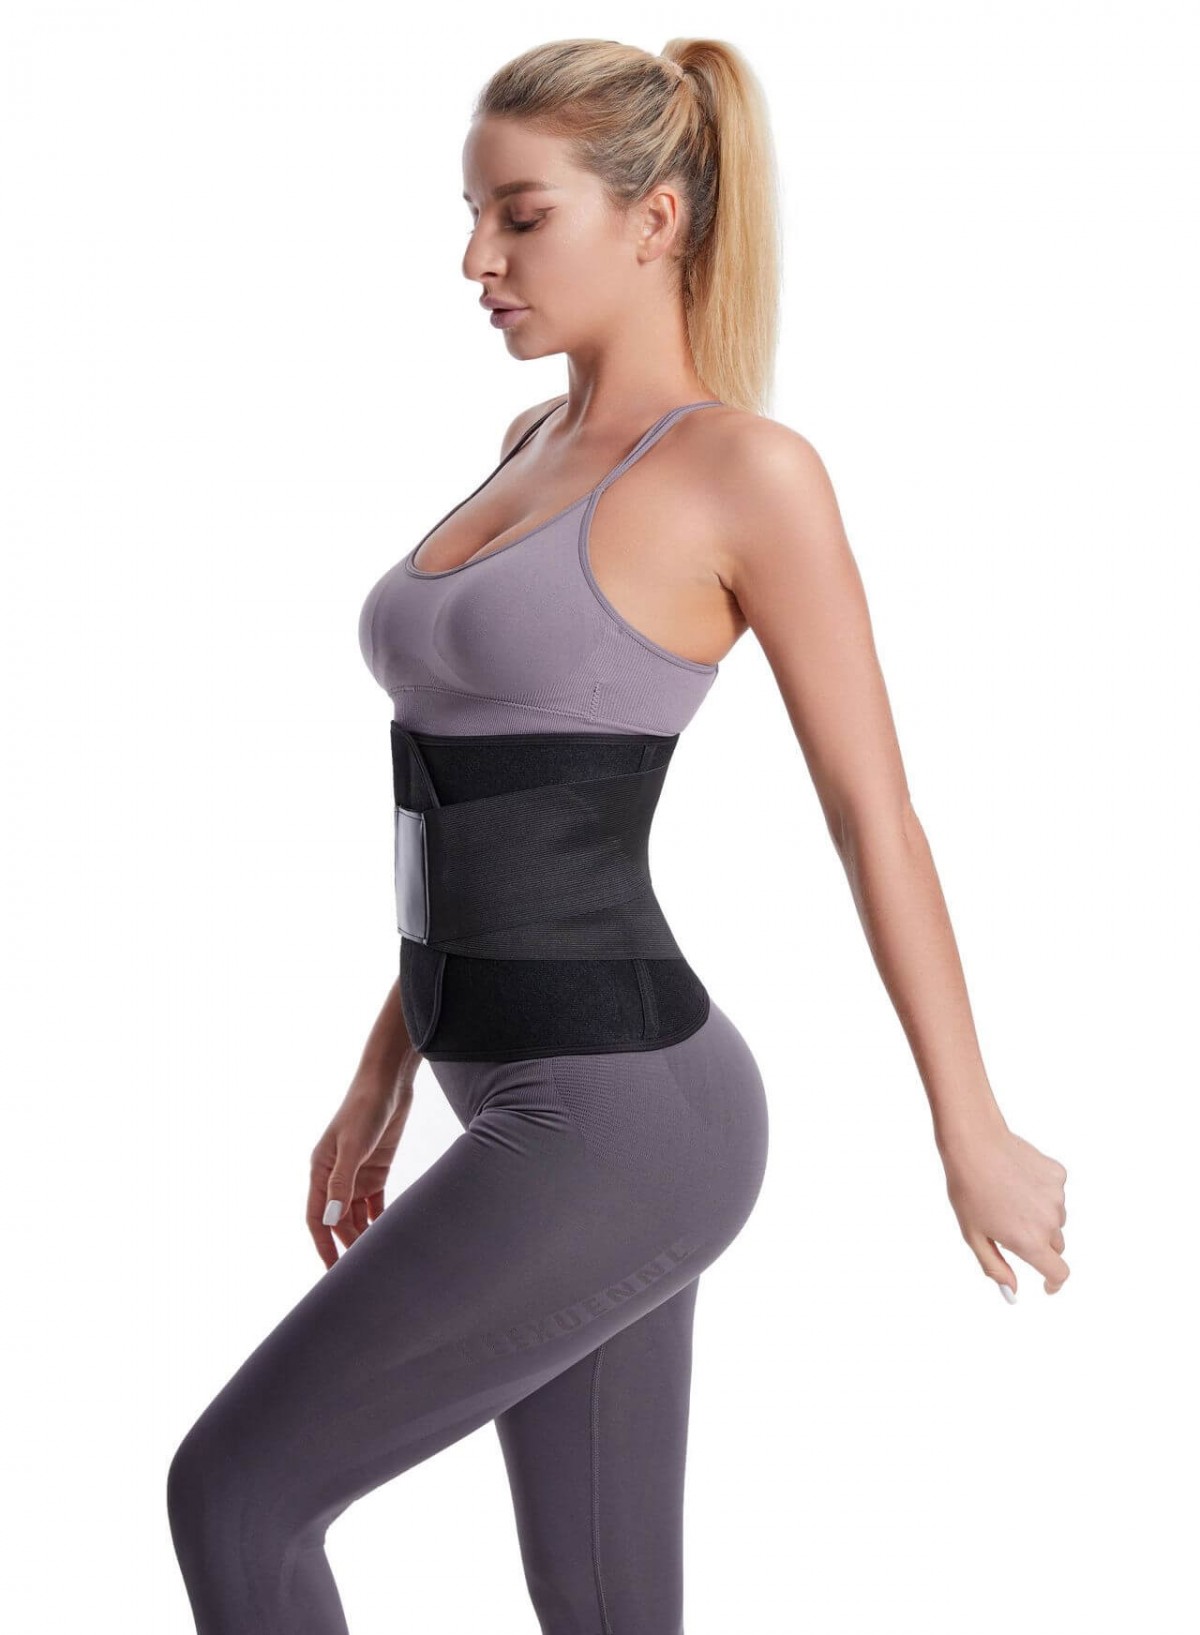 Black Postpartum Section Recovery Belt Binder Waist Trainer Wrap Body Shaper 